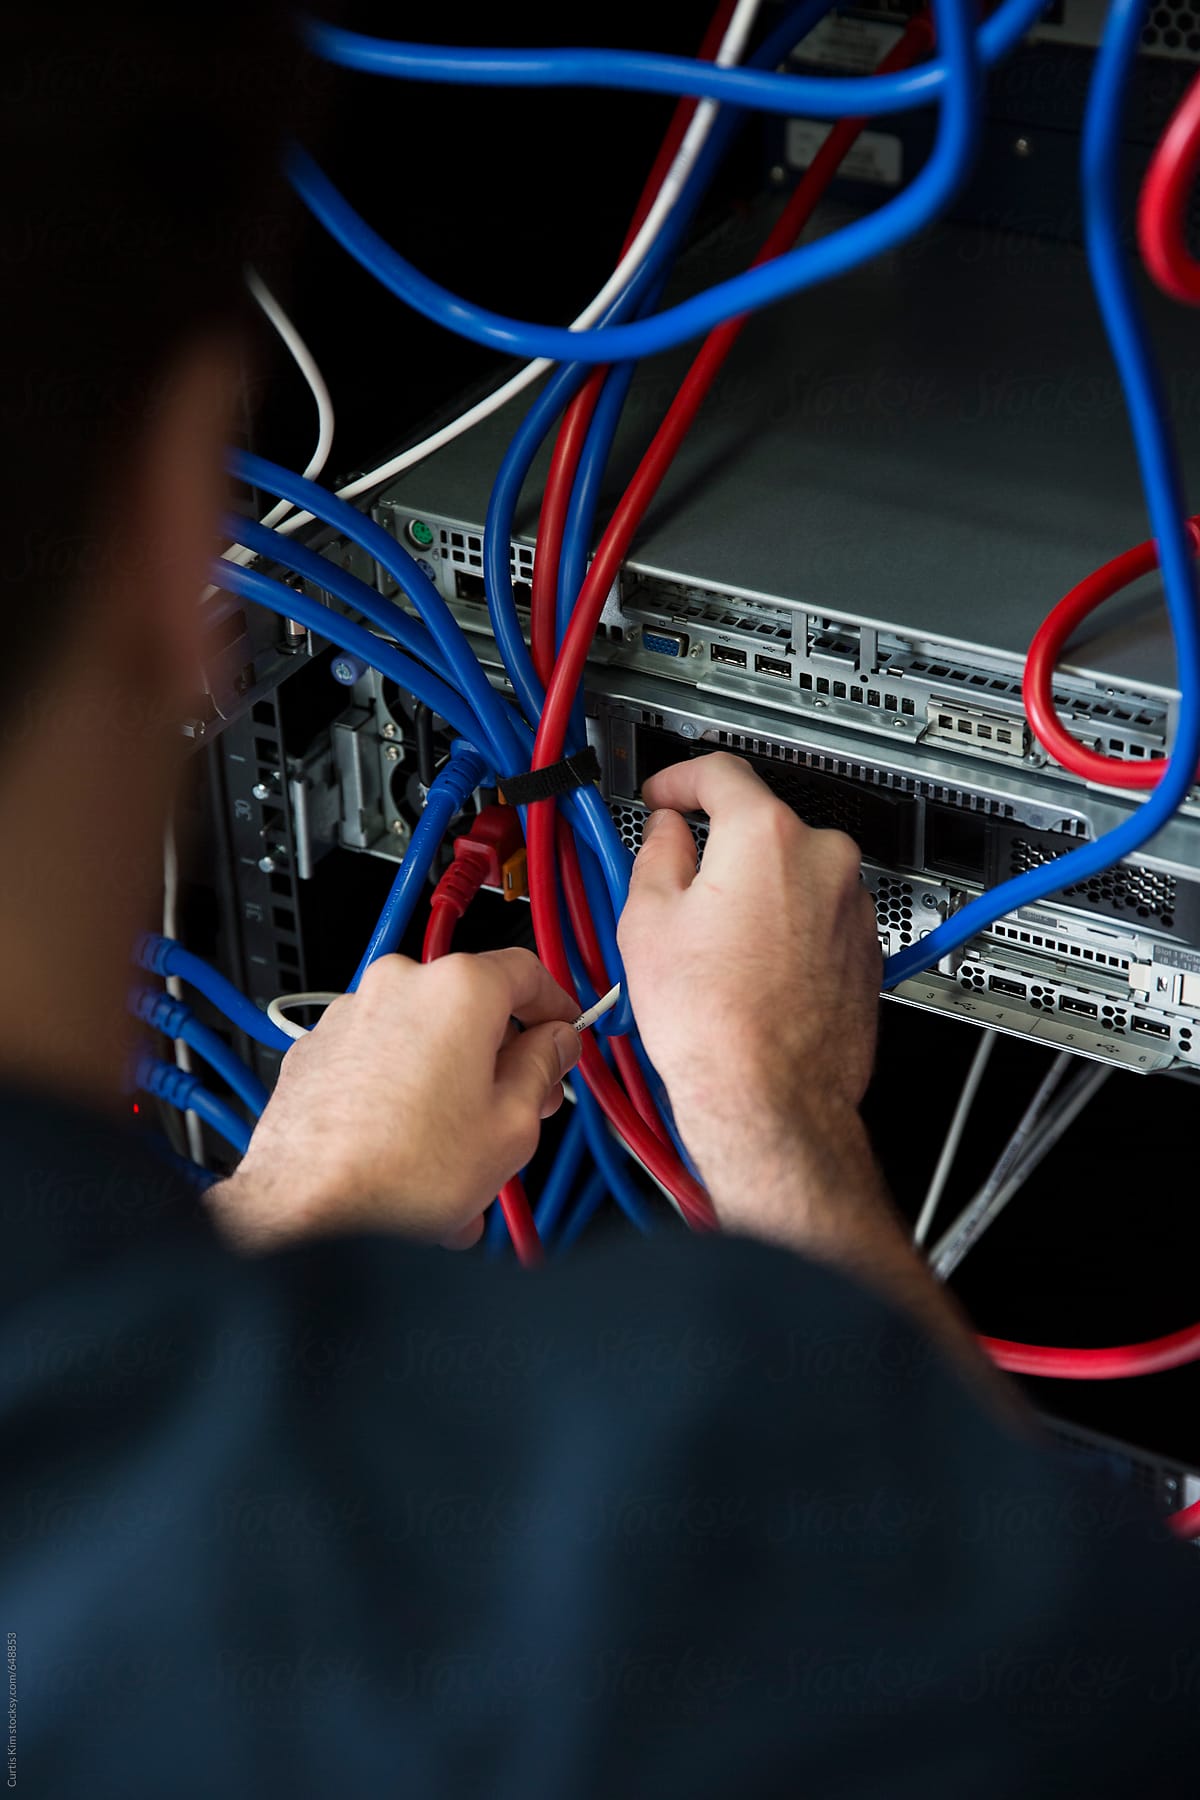 IT Computer Expert Working On Network Server